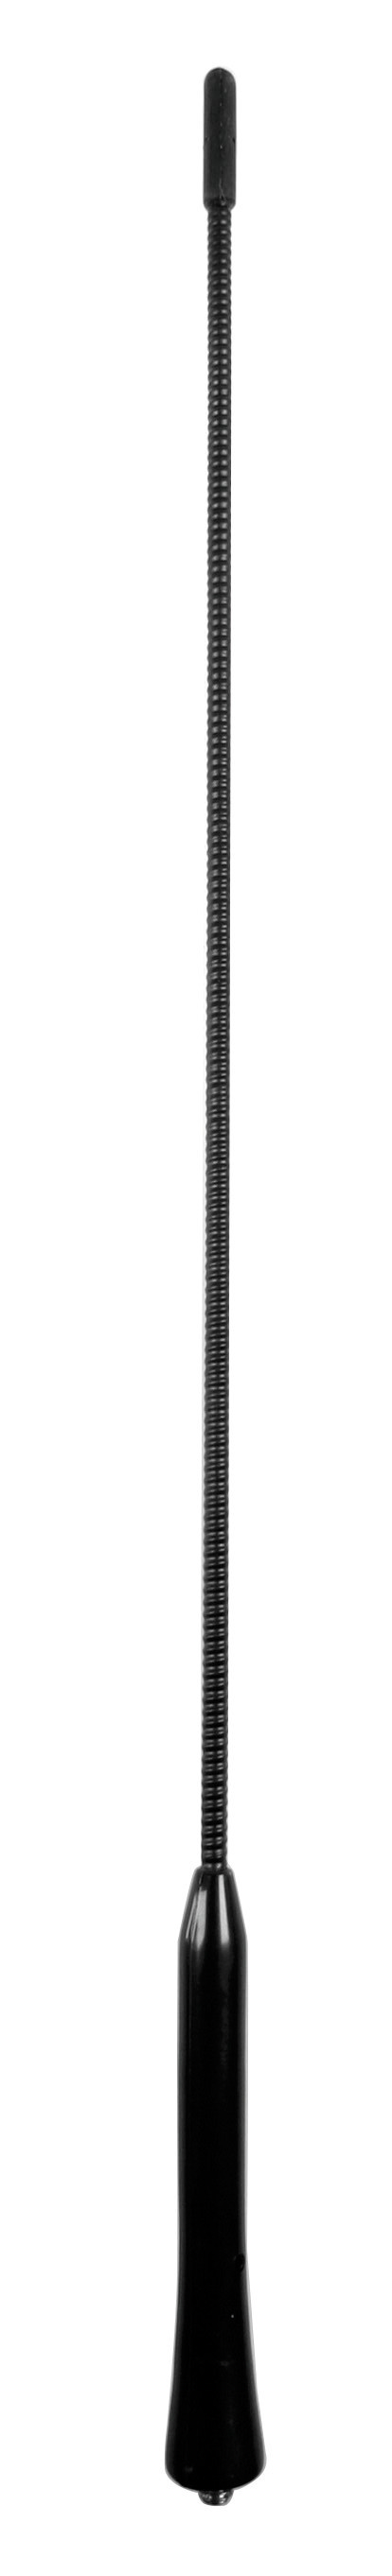 Lampa replacement Mast (AM/FM) - 41 cm - Ø 6 mm thumb